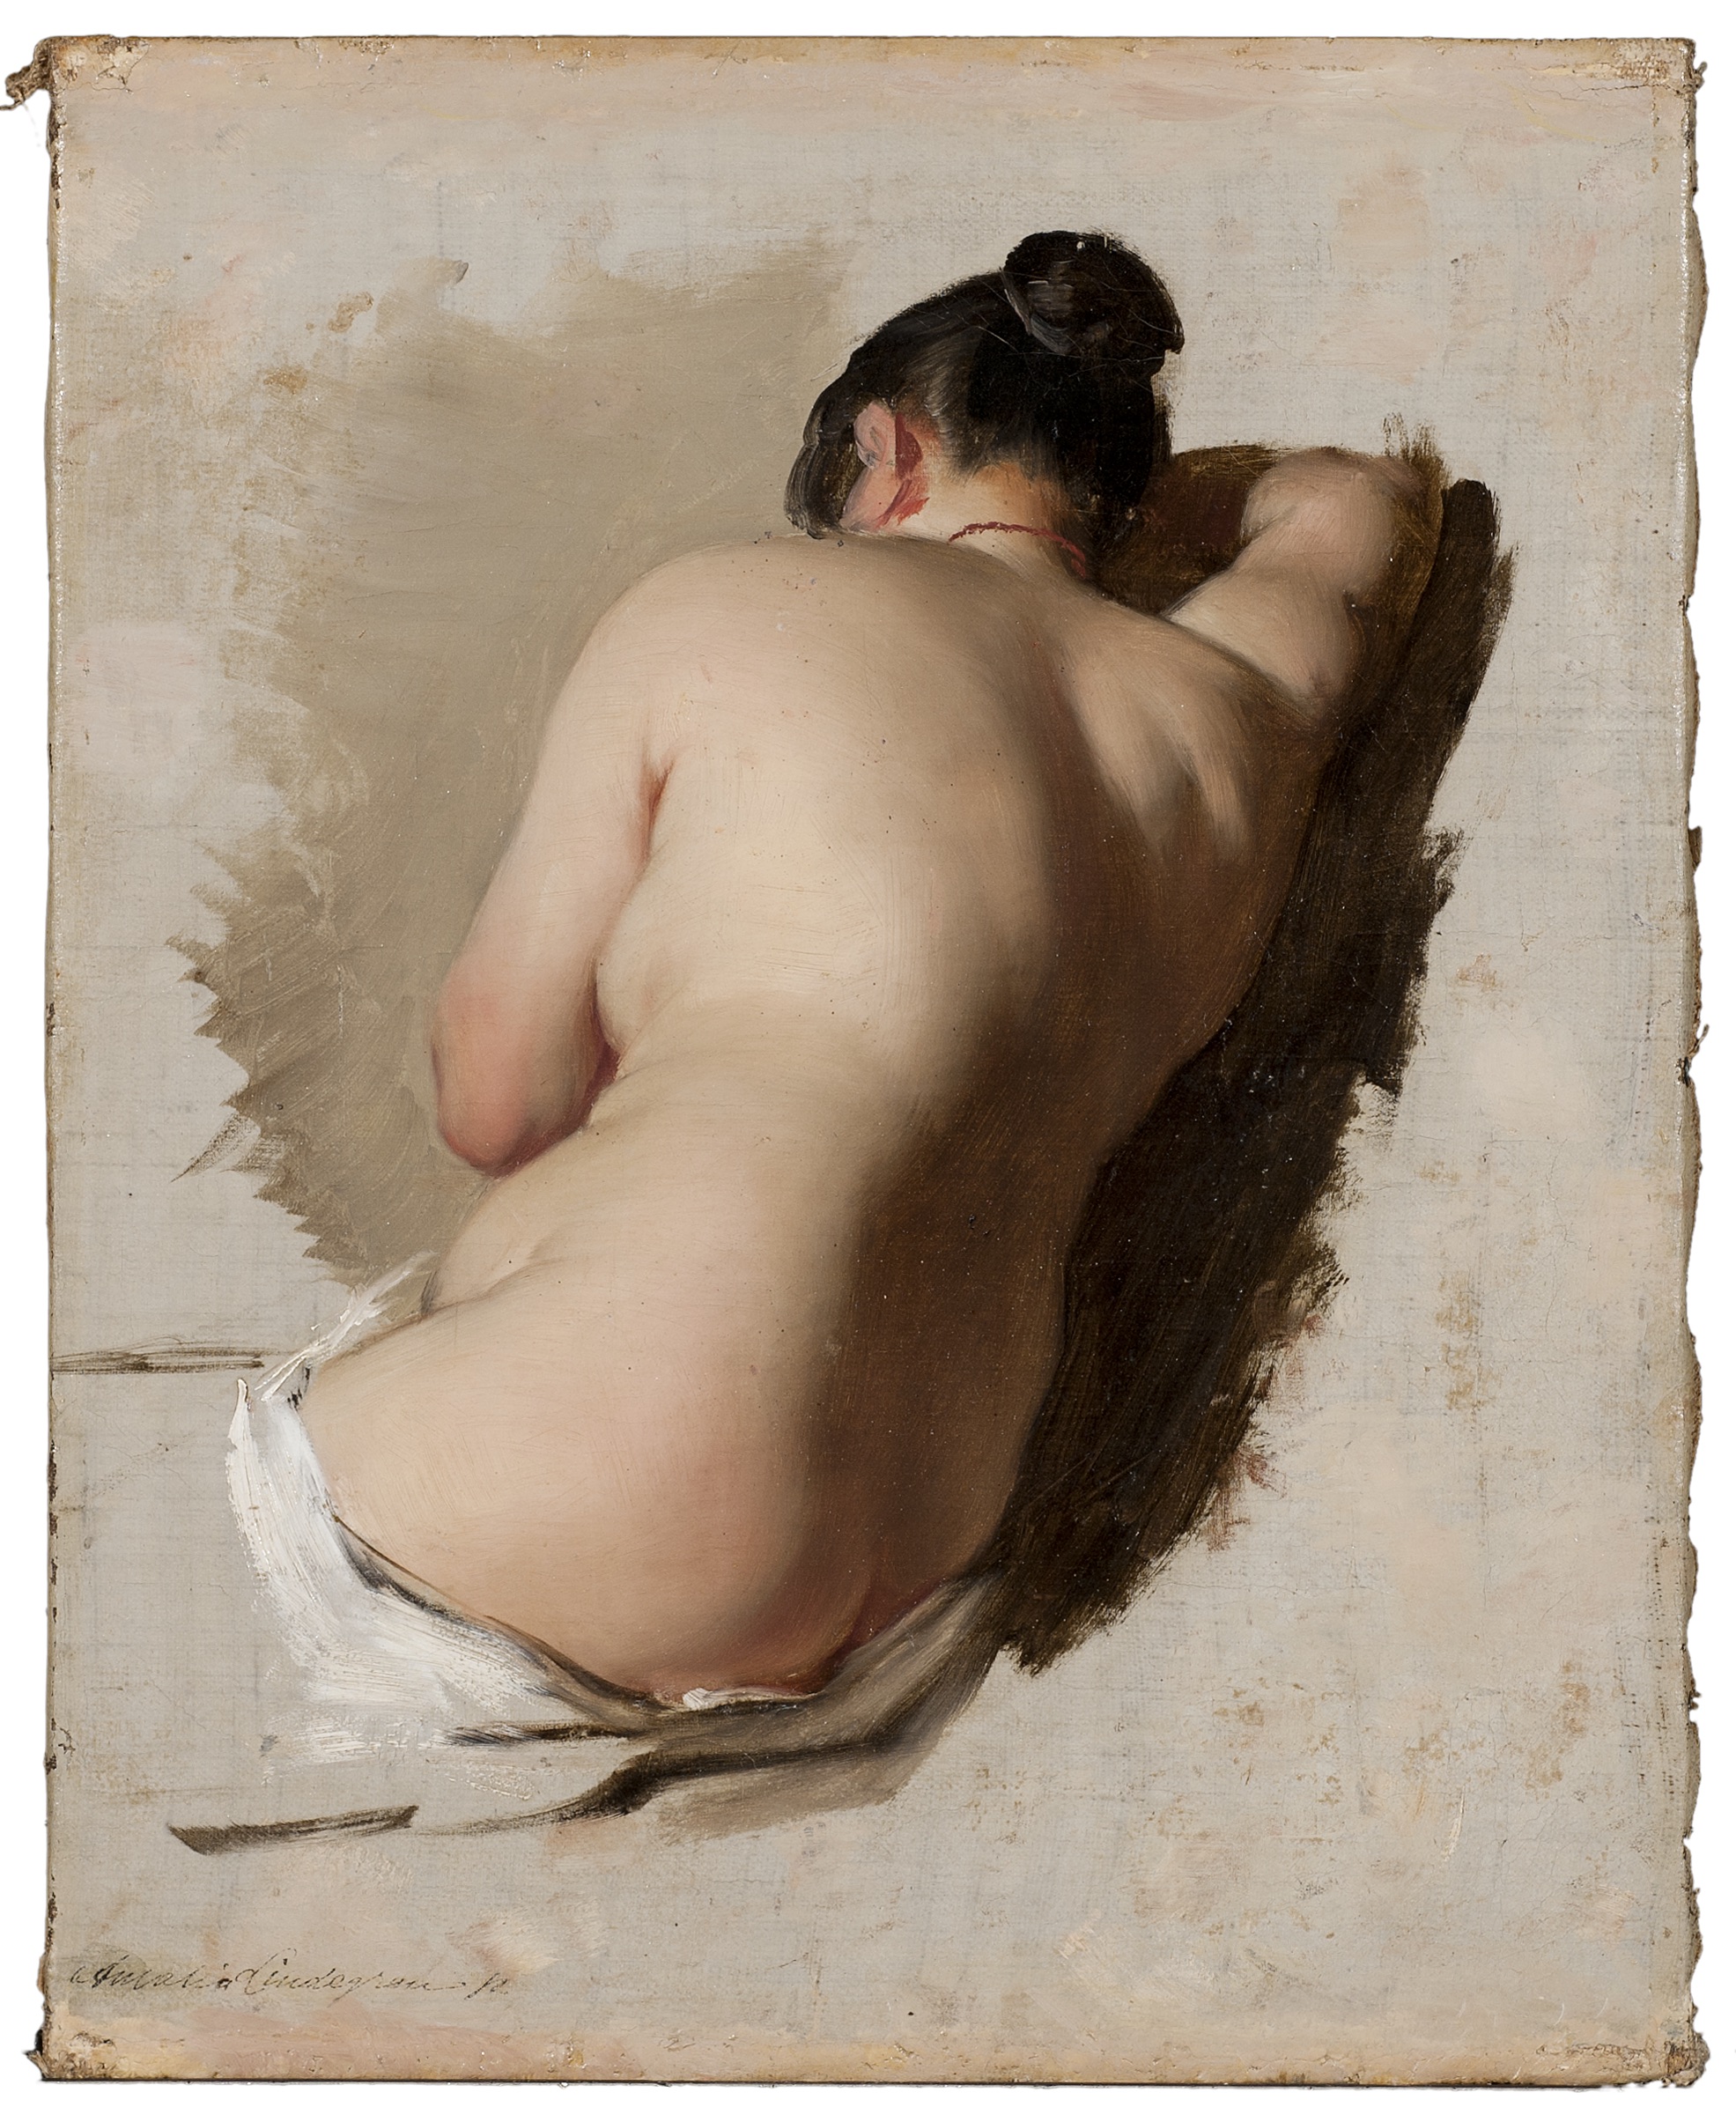 Naaktstudie by Amalia Lindegren - 1850 - 33,5 x 26,5 cm 